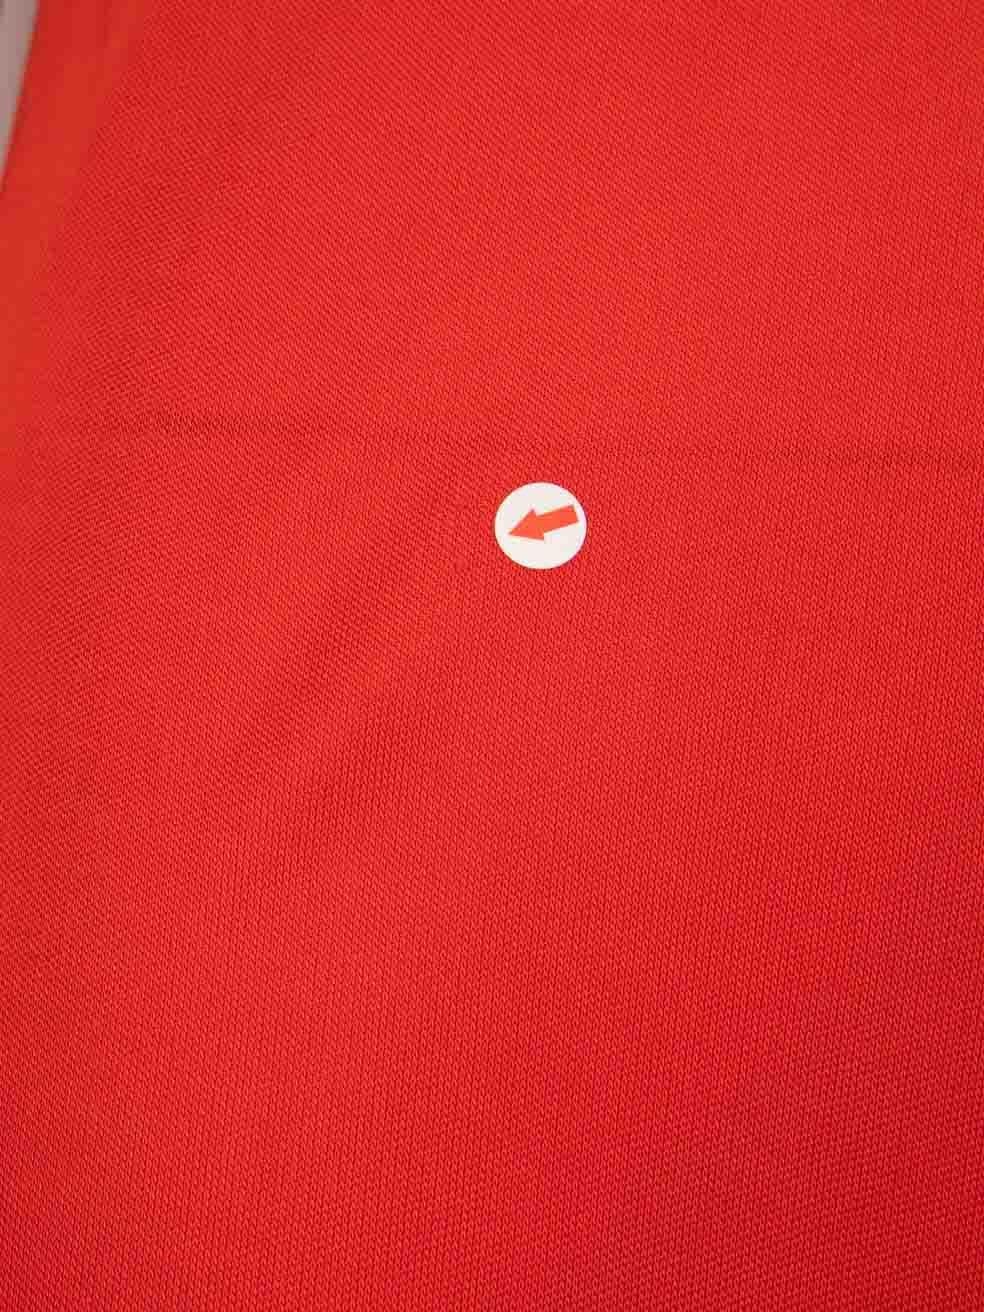 Roberto Cavalli Red One-Shoulder Drape Mini Dress Size L For Sale 3